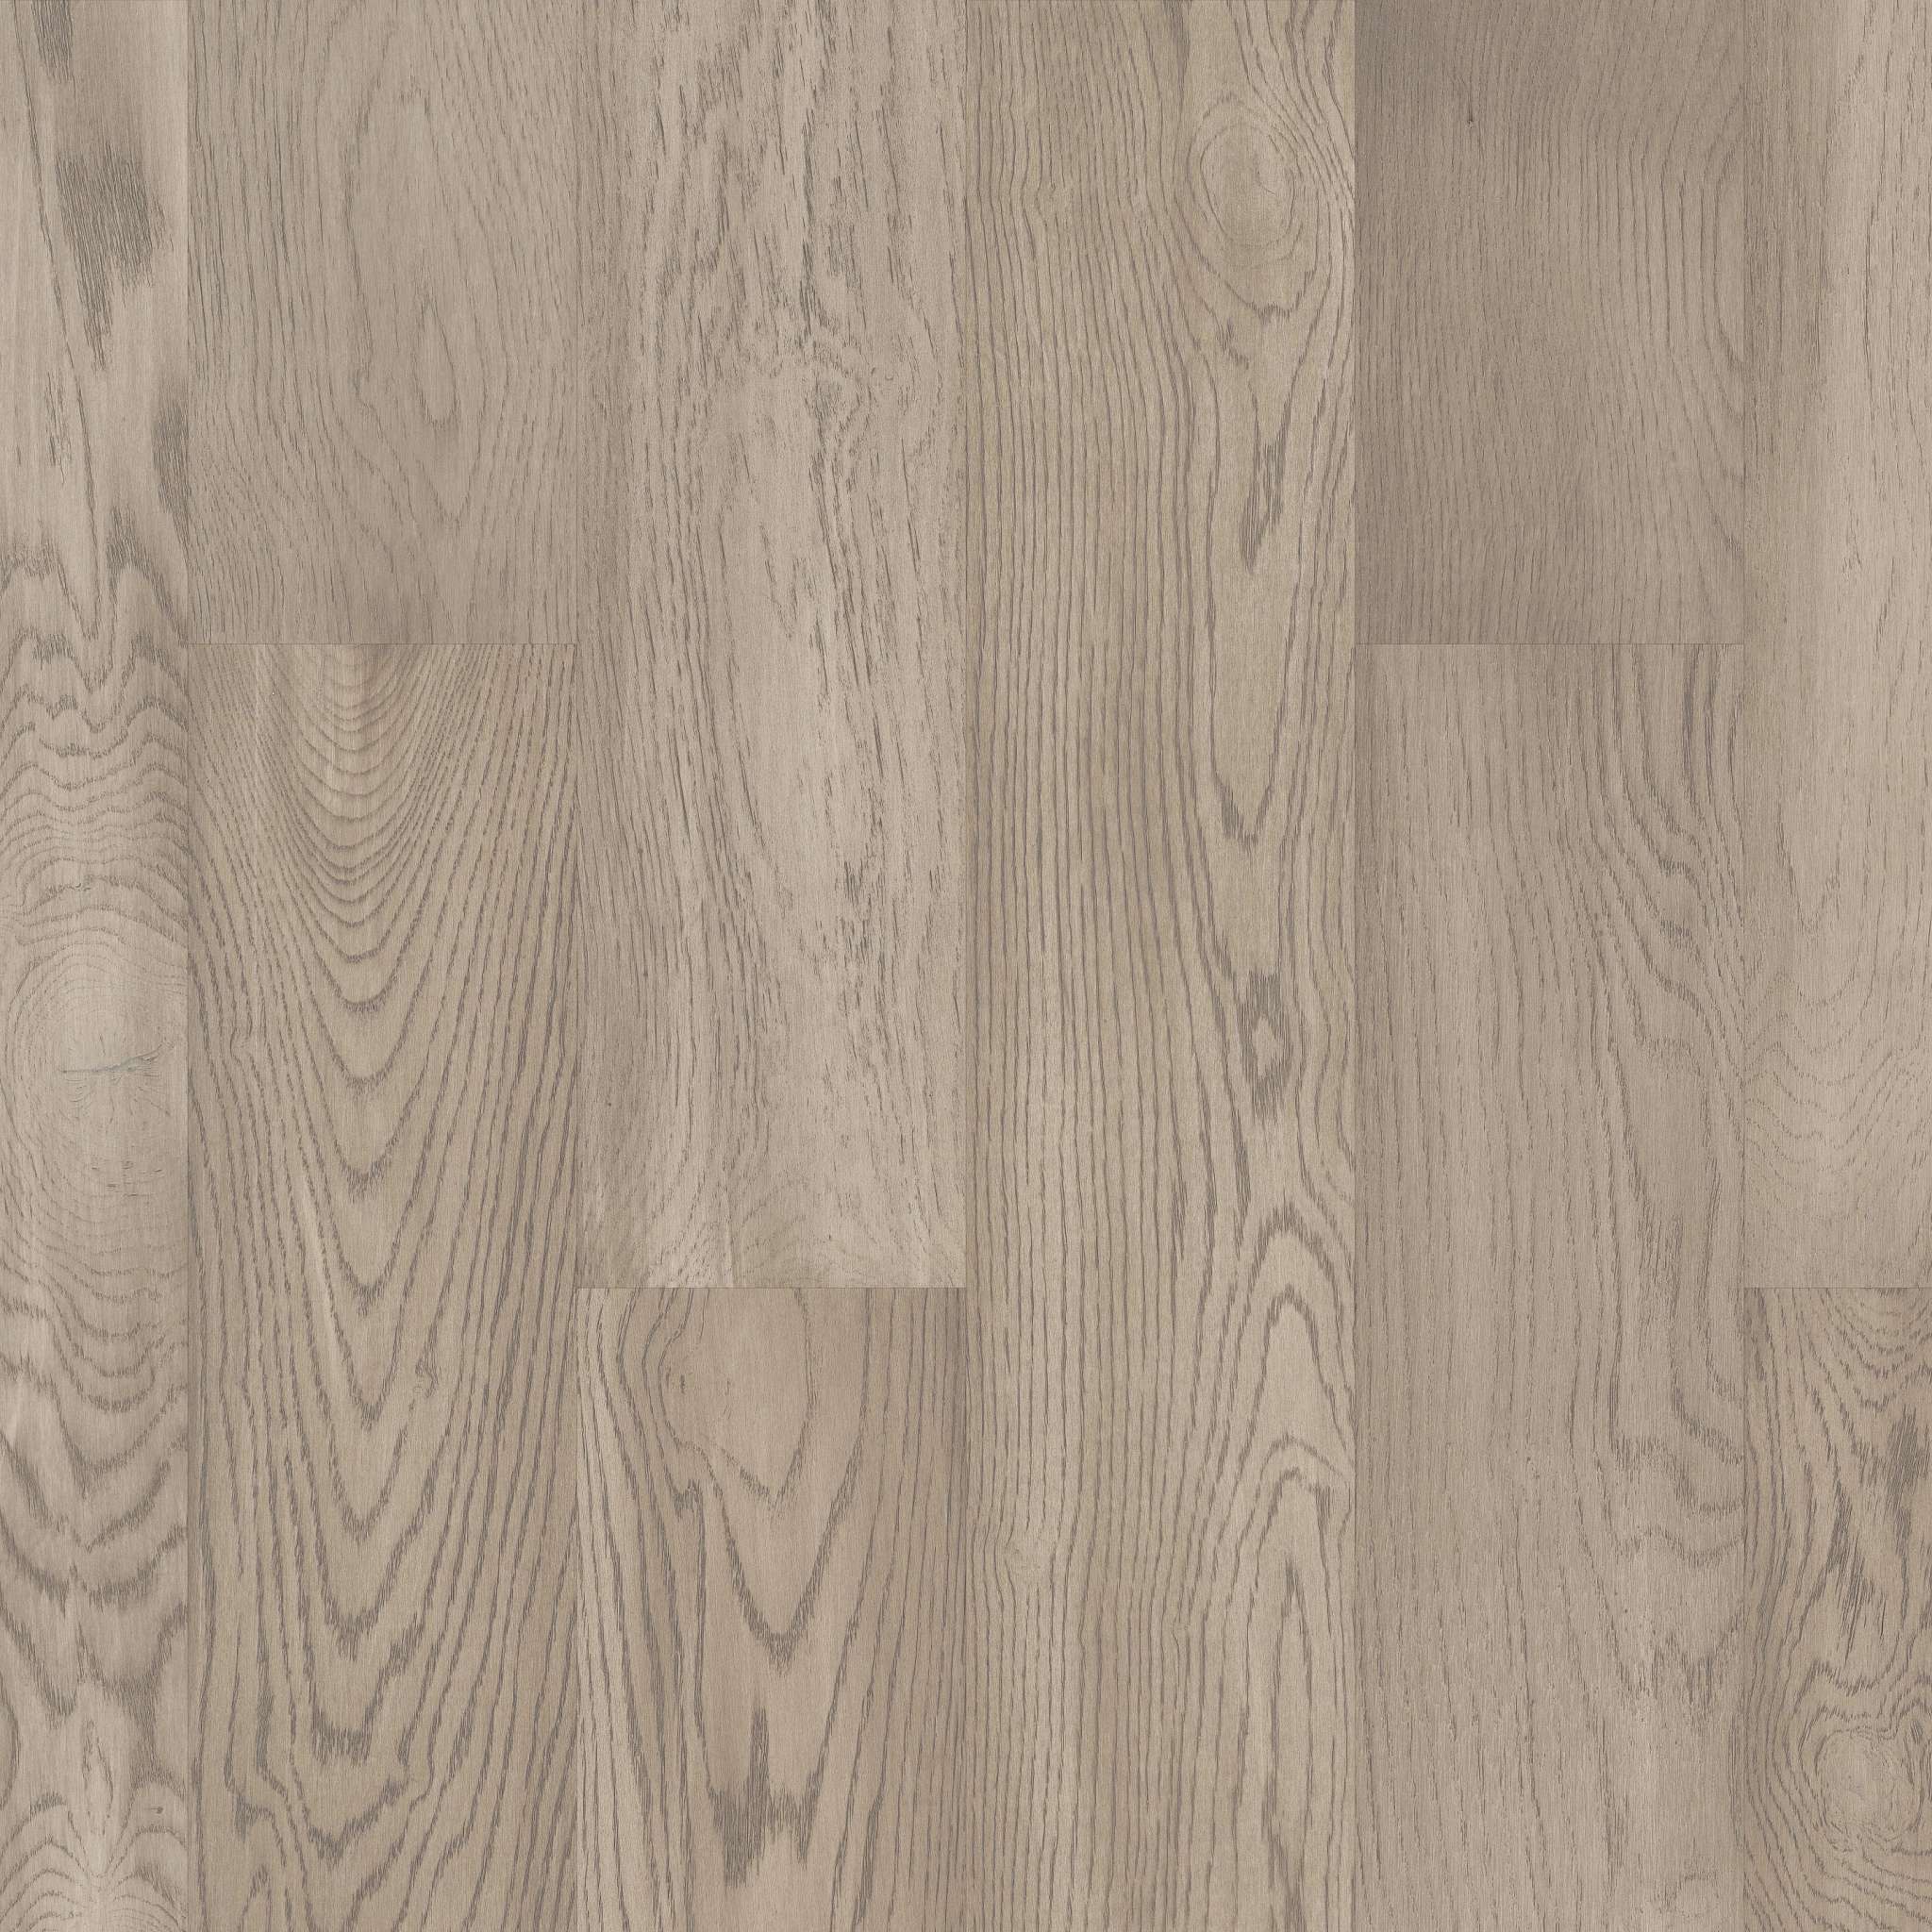 Exquisite Fh820 Silverado Oak Hardwoods, Silverado Collection Hardwood Flooring